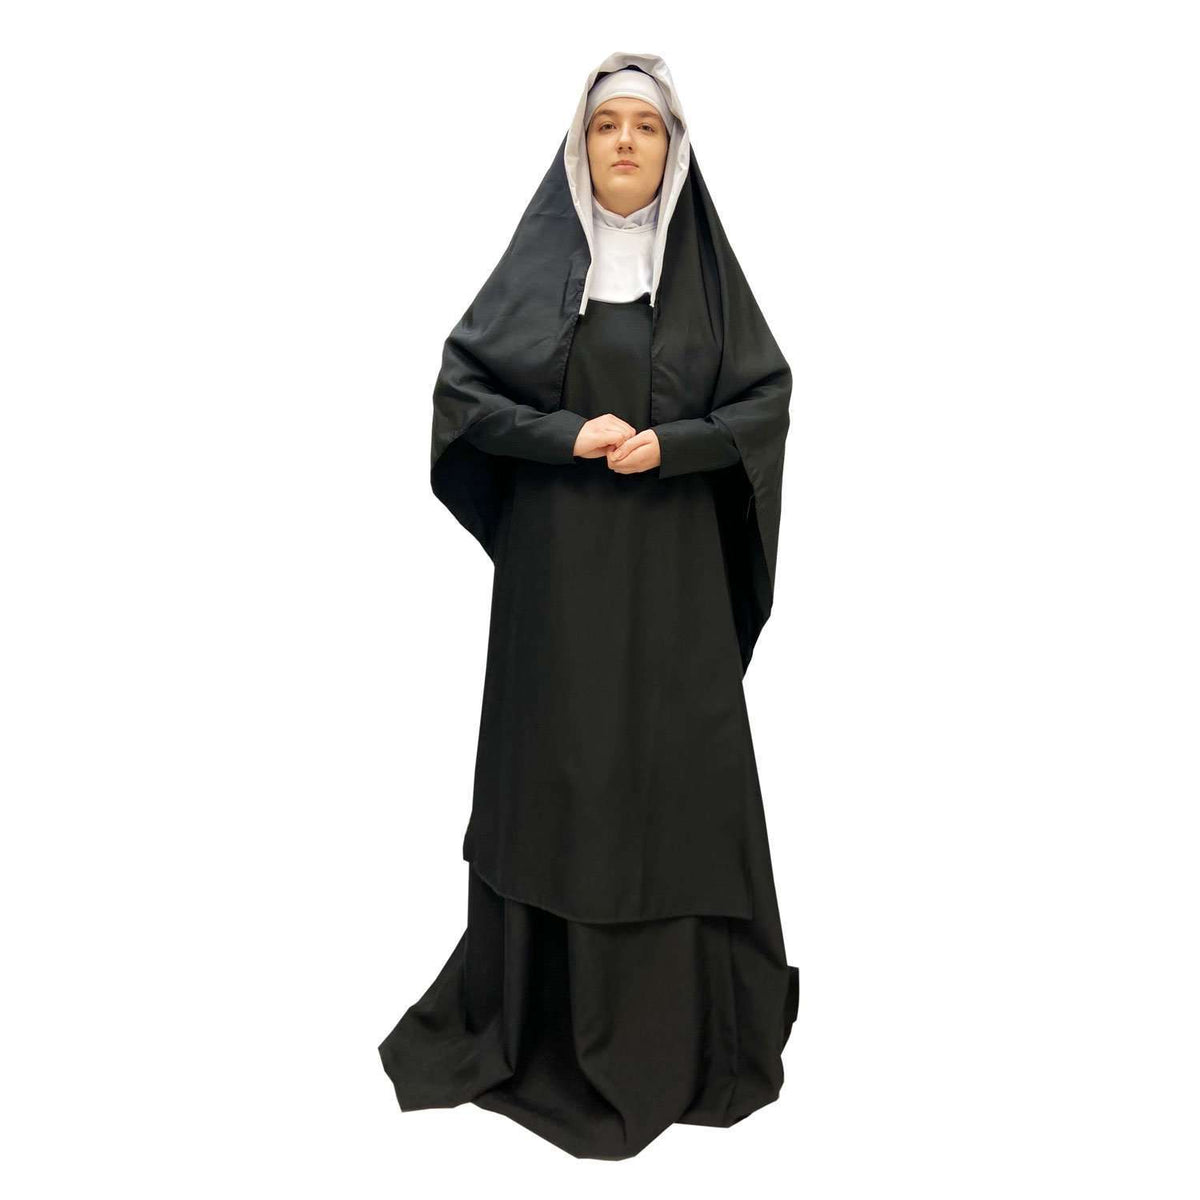 dress of a nun